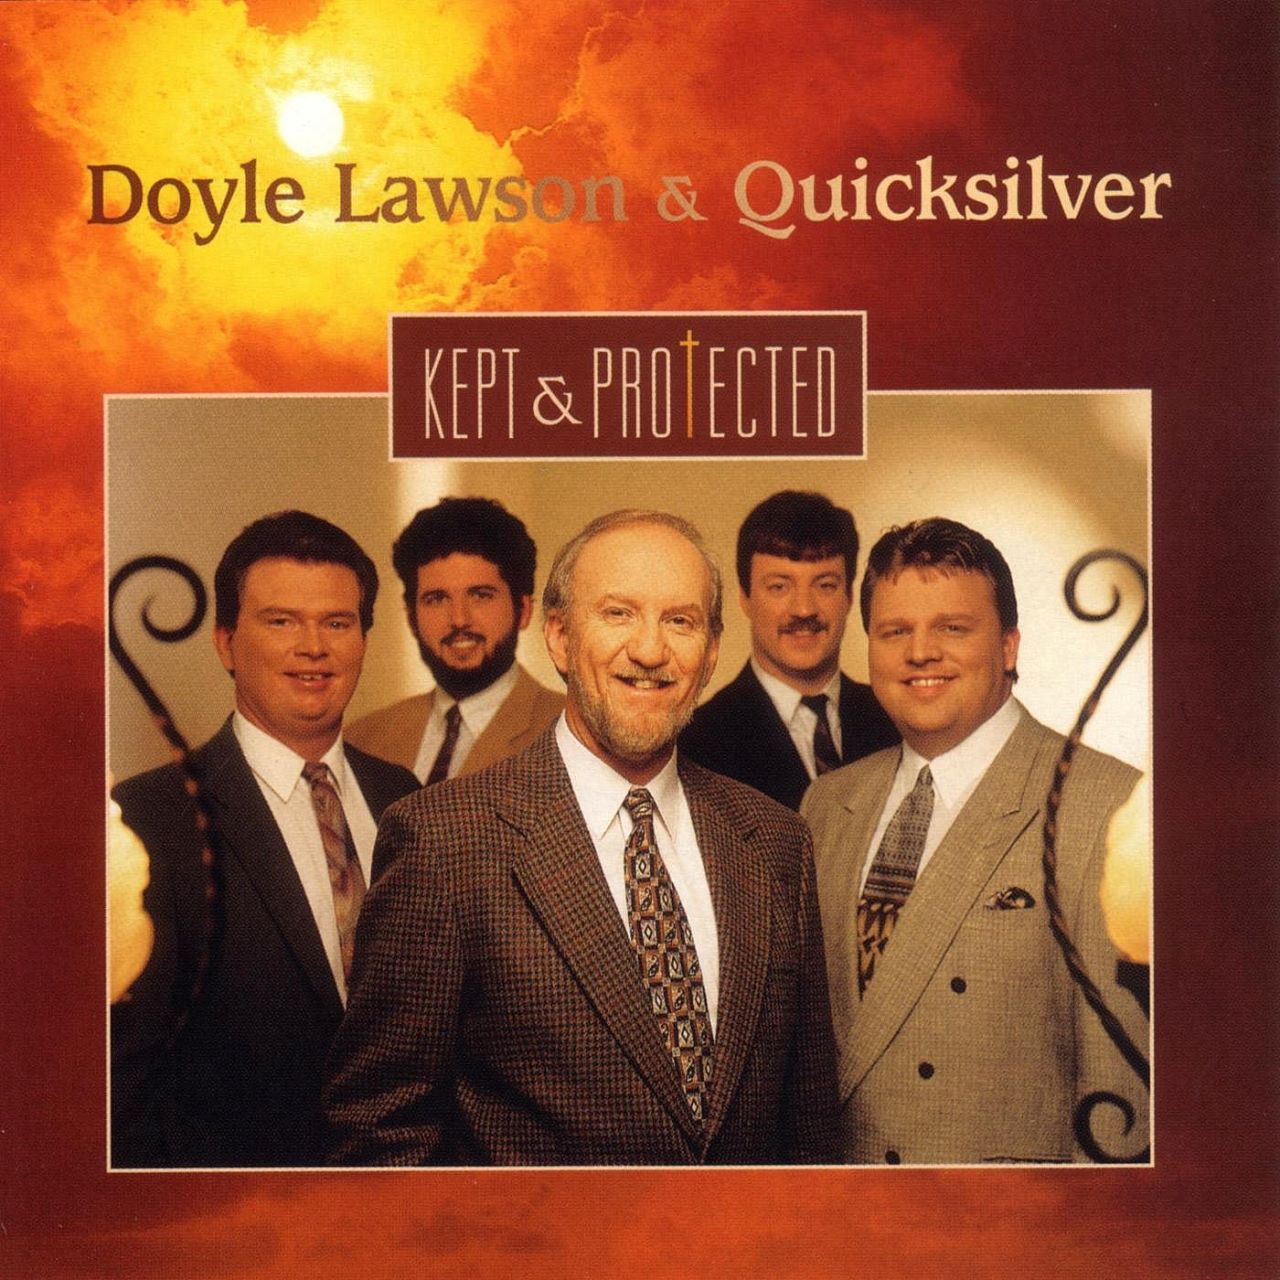 Doyle Lawson & Quicksilver - Kept & Protected cover album